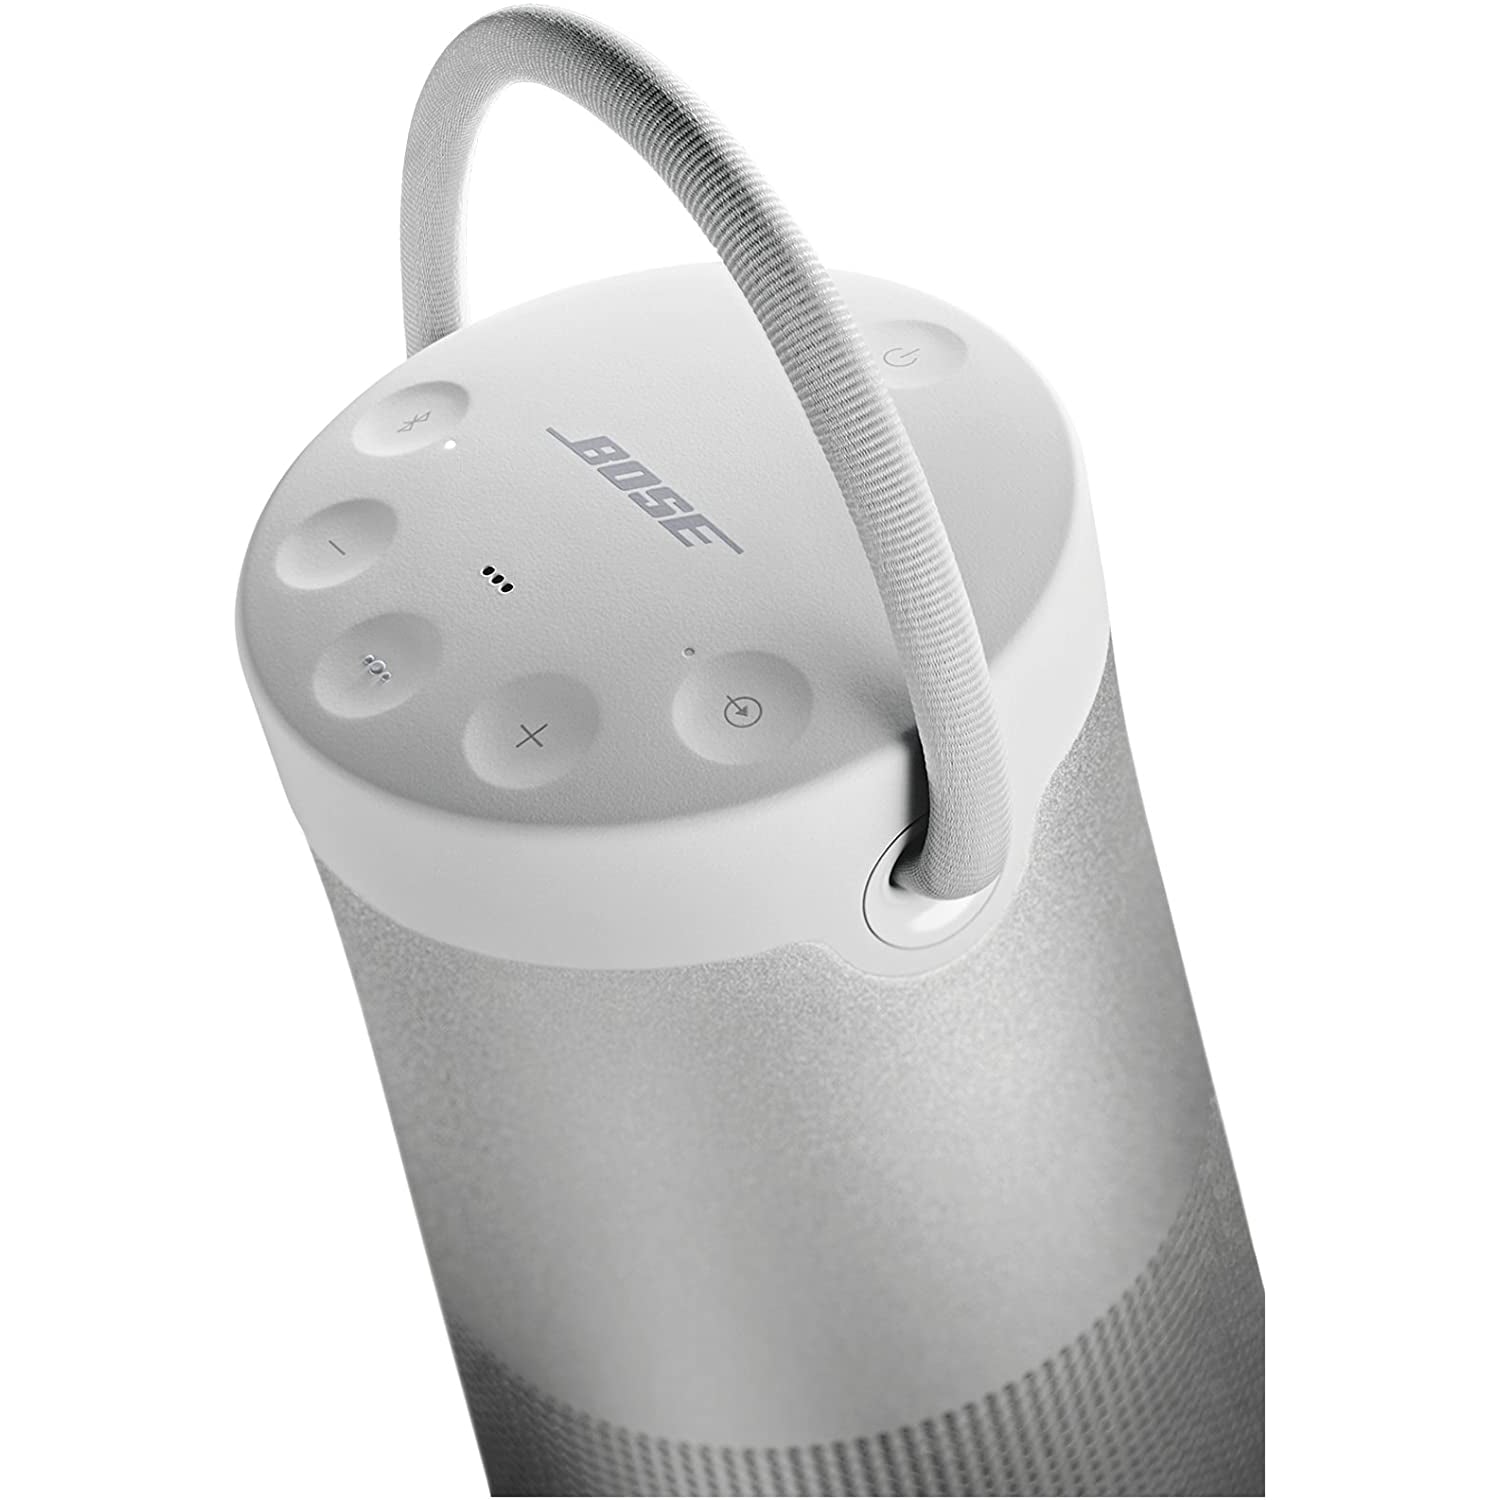 Bose SoundLink Revolve+ Portable Bluetooth Speaker - Luxe Silver - Refurbished Pristine